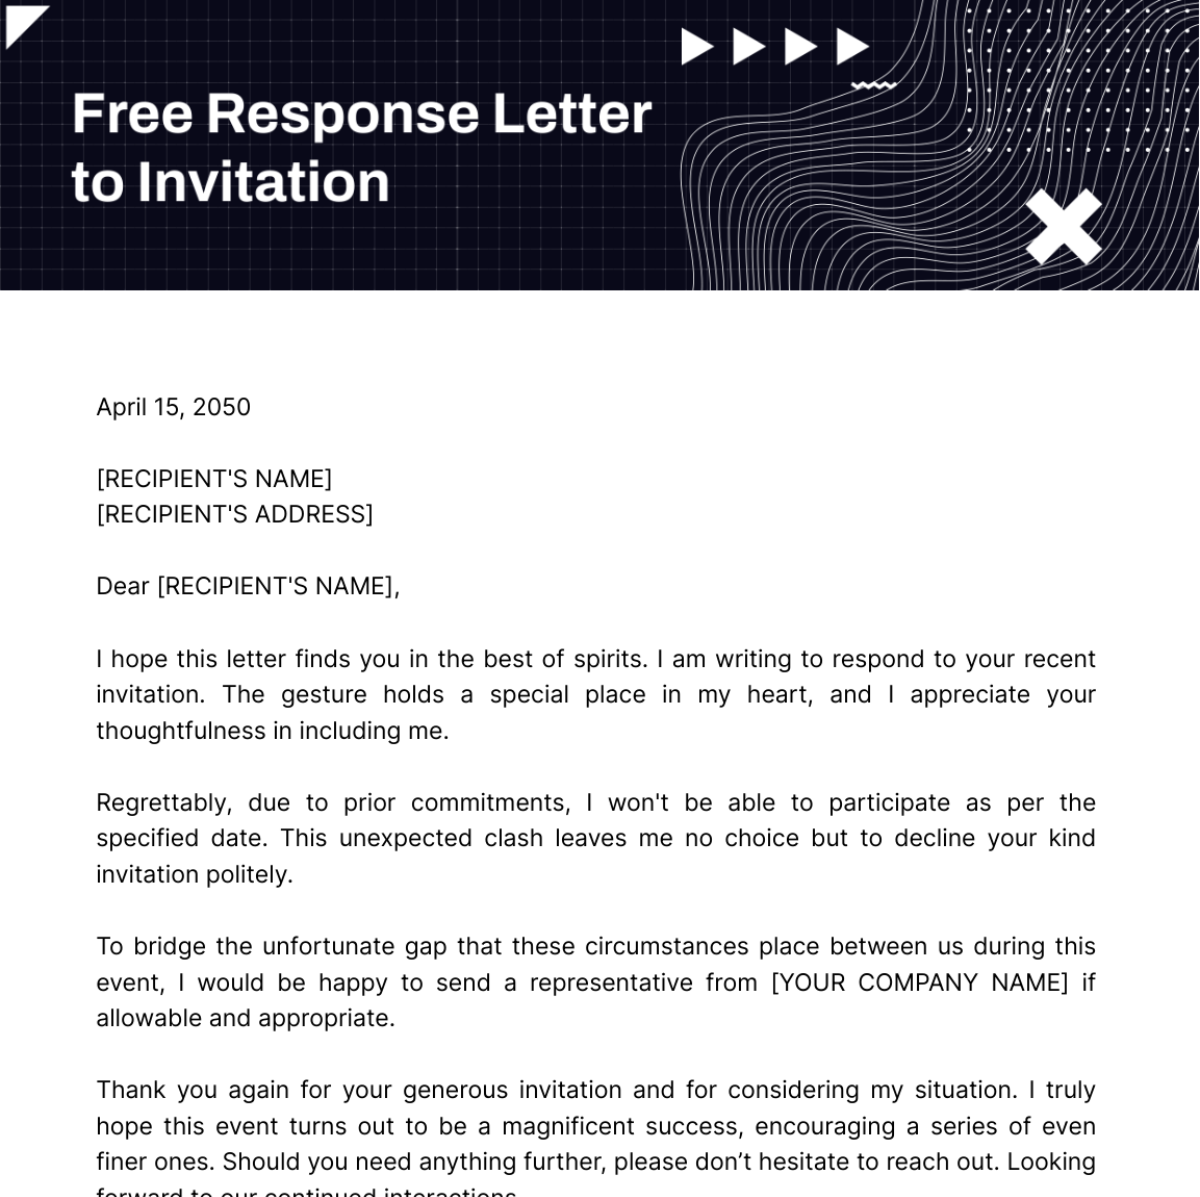 Free Response Letter to Invitation